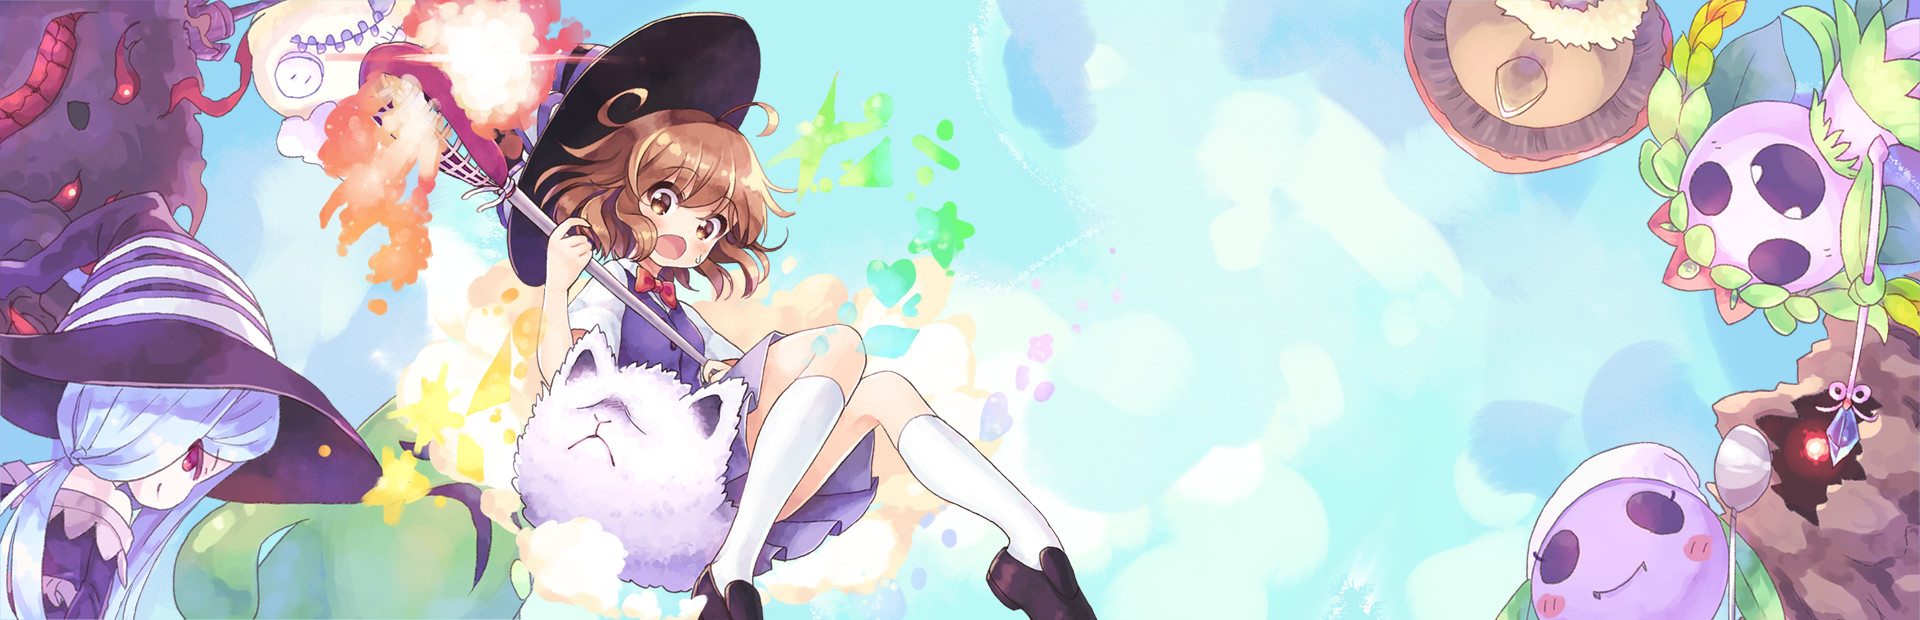 A Magical High School Girl / 魔法の女子高生 cover image